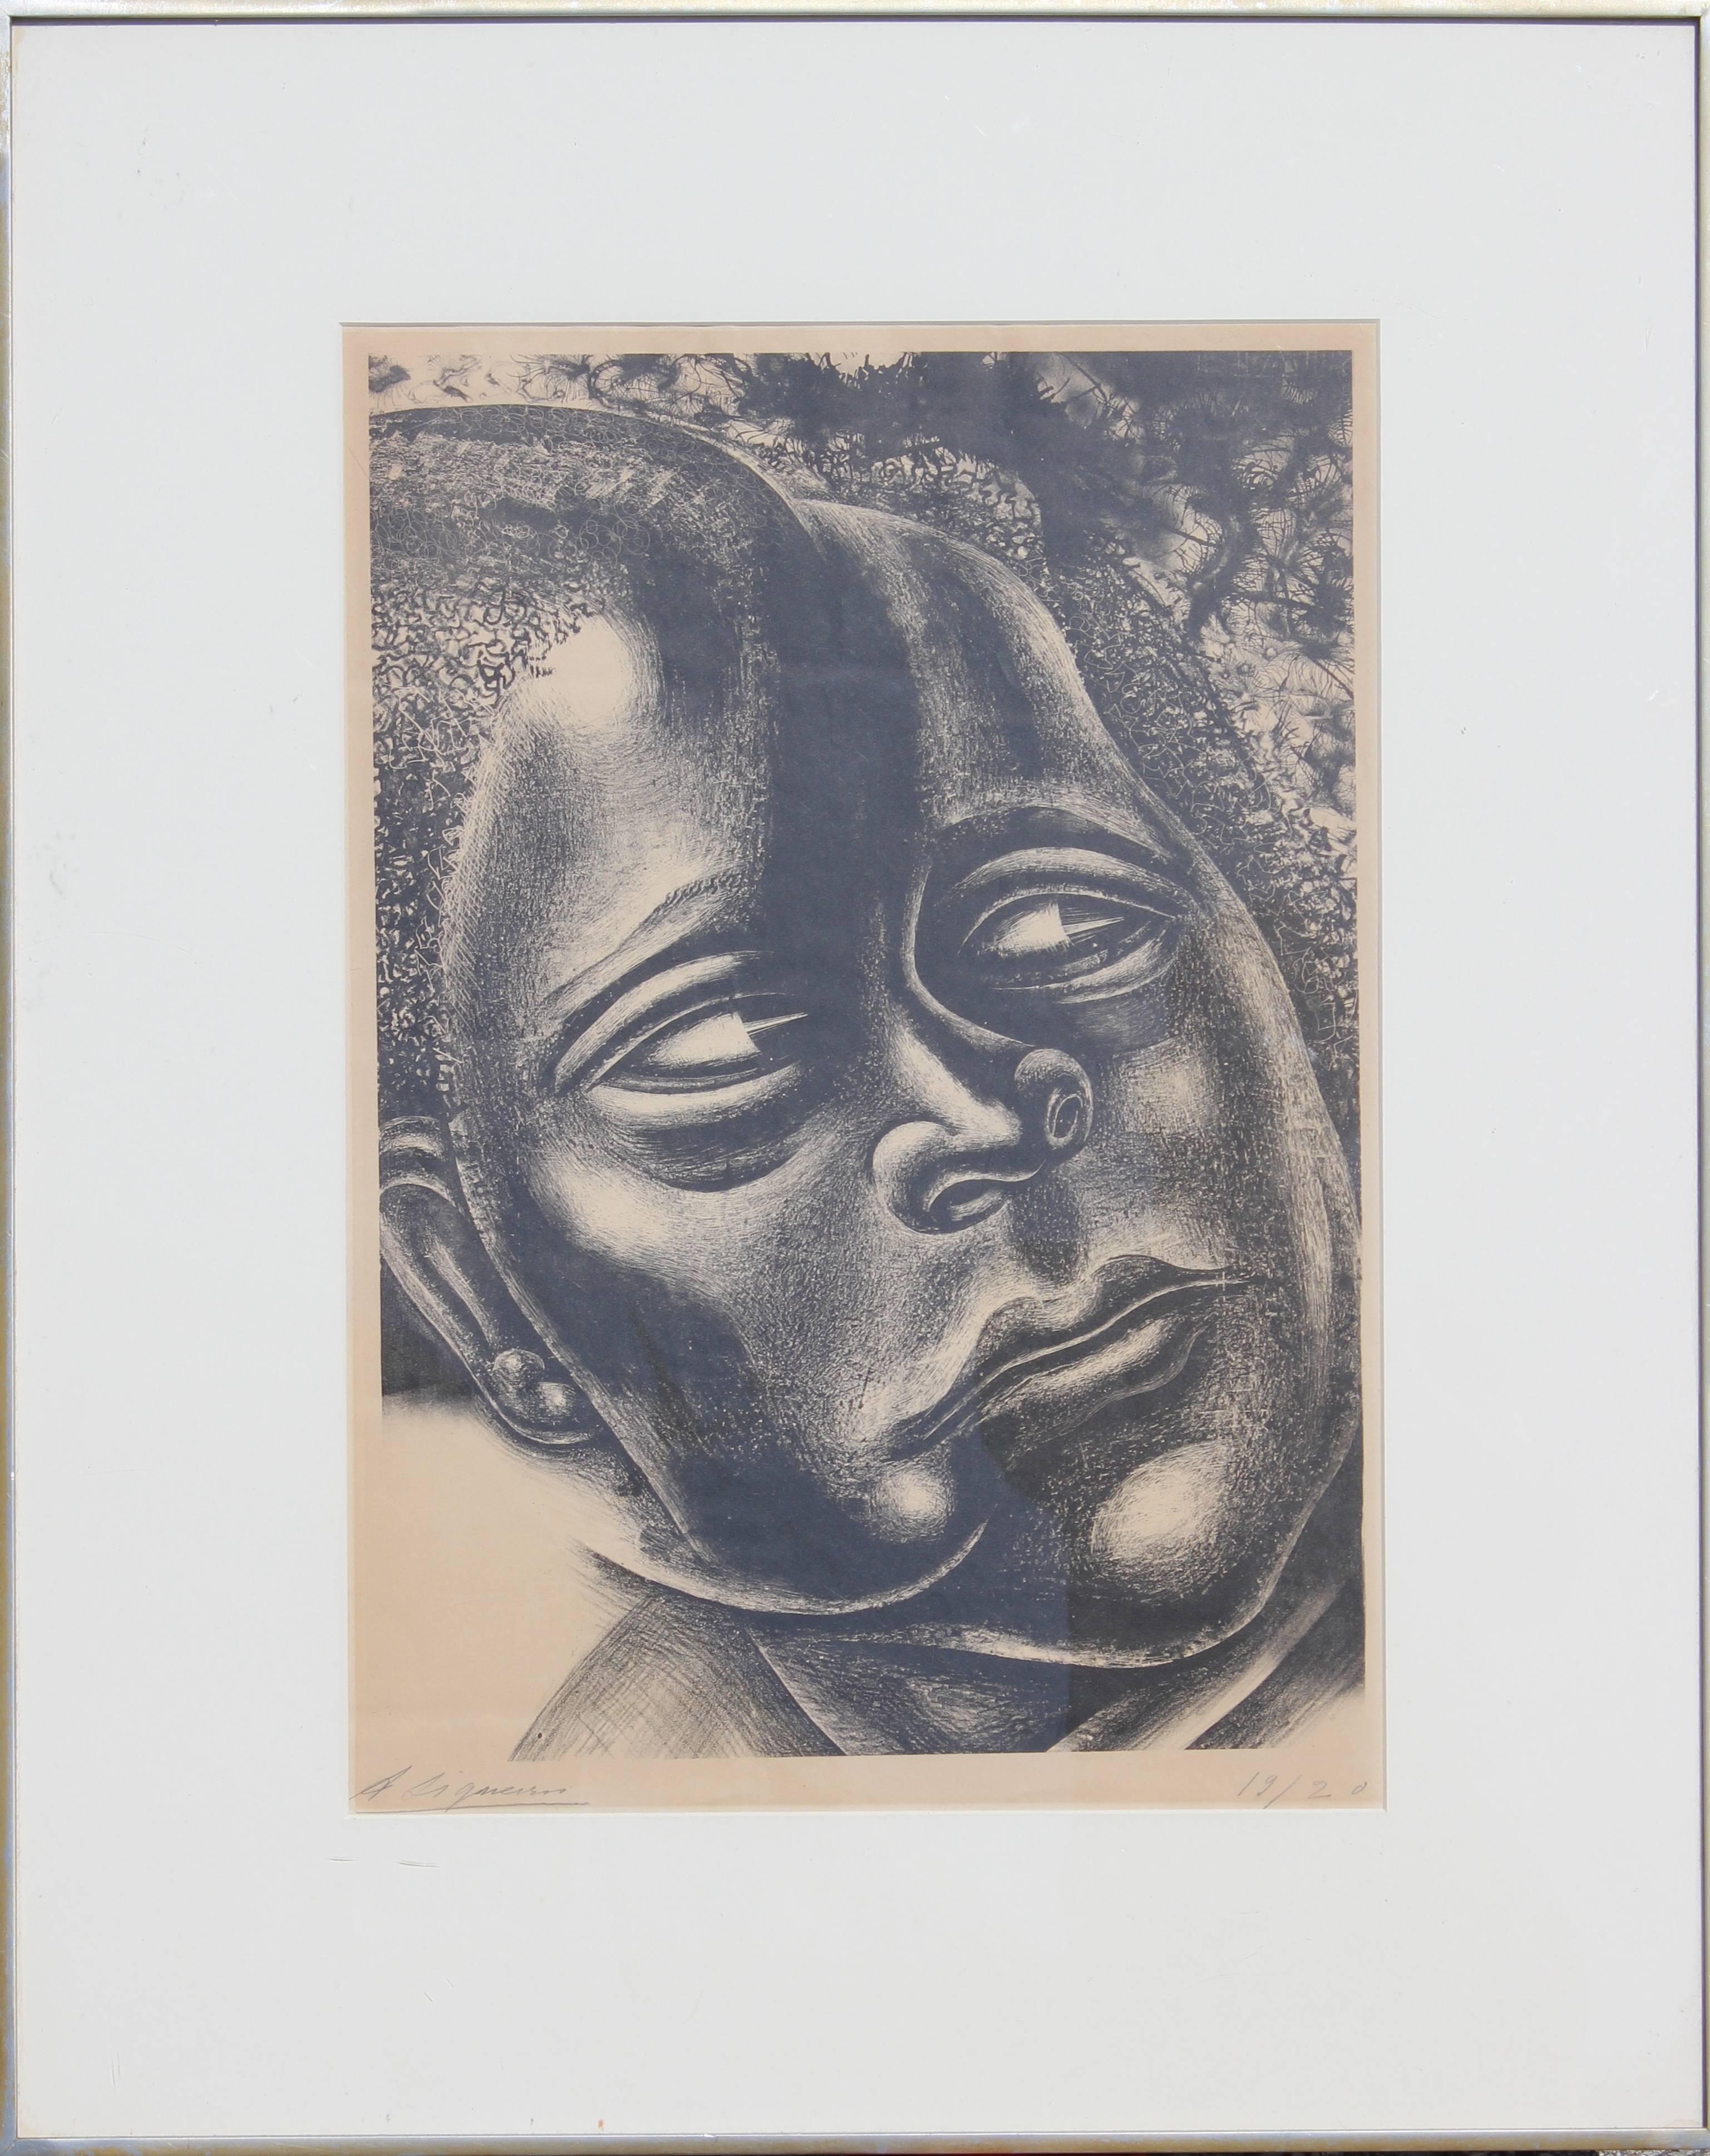 David Siqueiros Abstract Print - Portrait Lithograph Edition 19/20